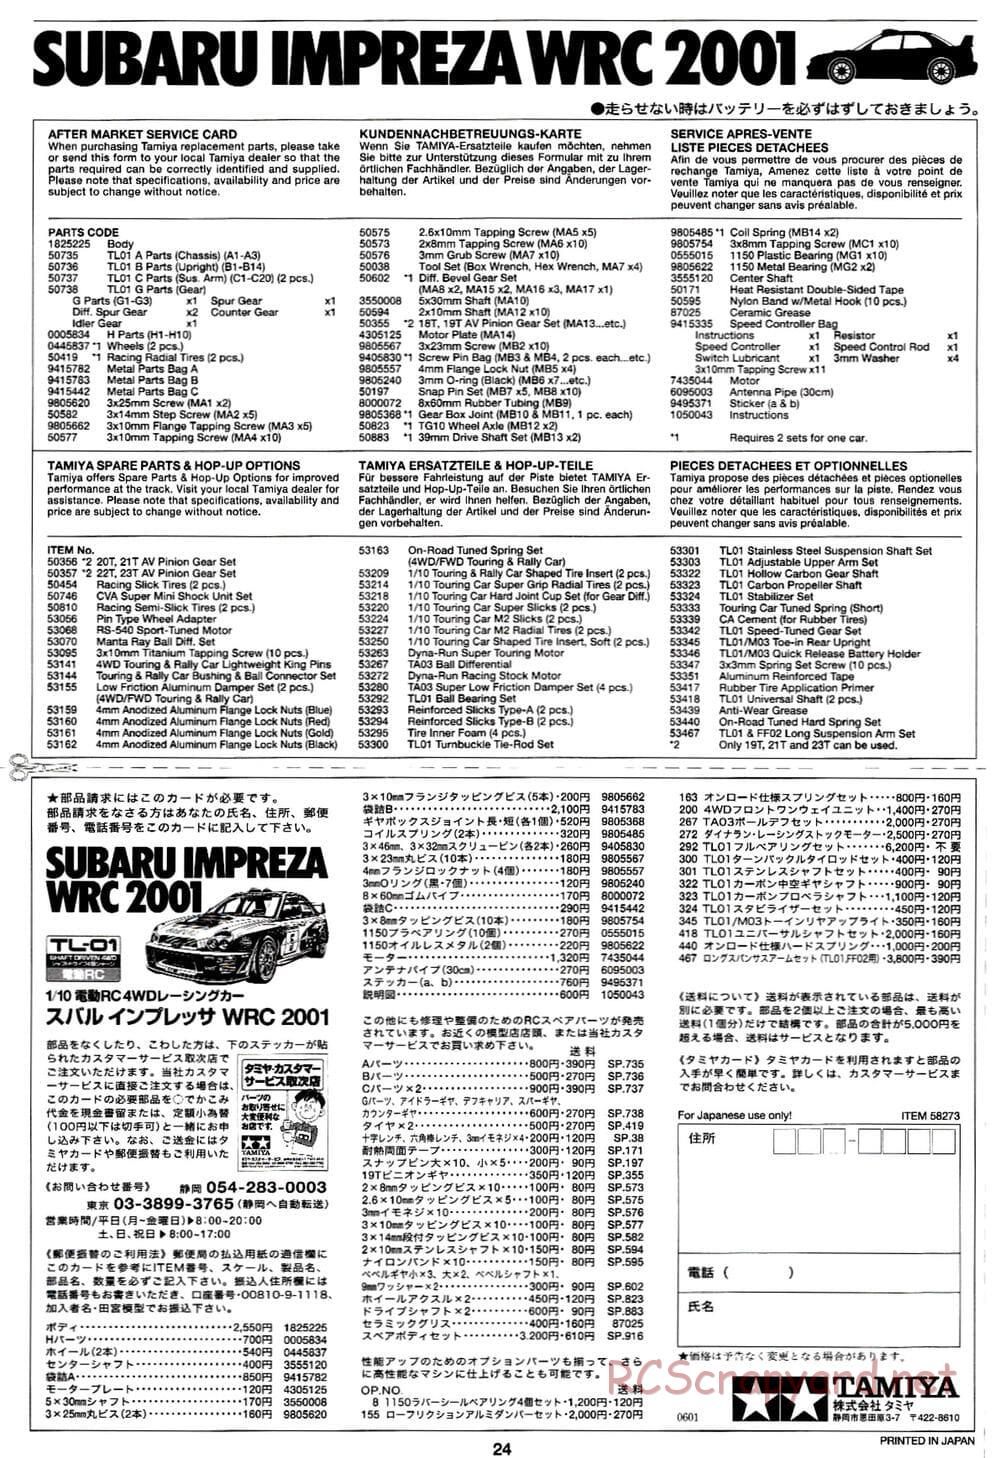 Tamiya - Subaru Impreza WRC 2001 - TL-01 Chassis - Manual - Page 24